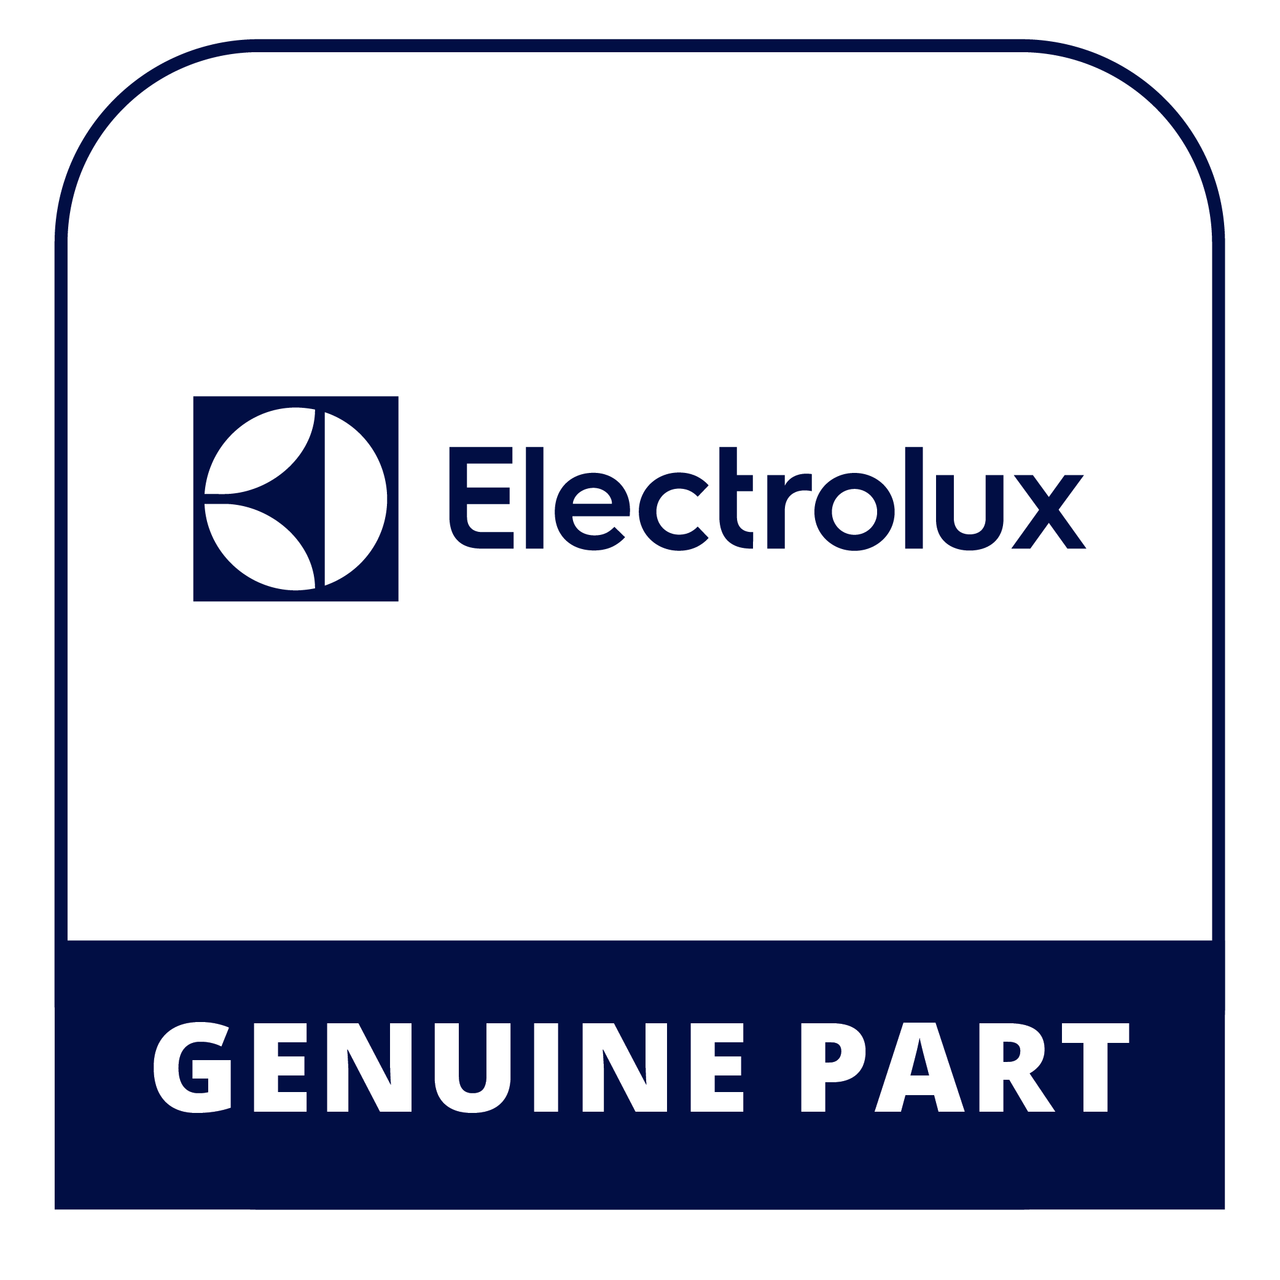 Frigidaire - Electrolux 5304498886 Tubing - Genuine Electrolux Part